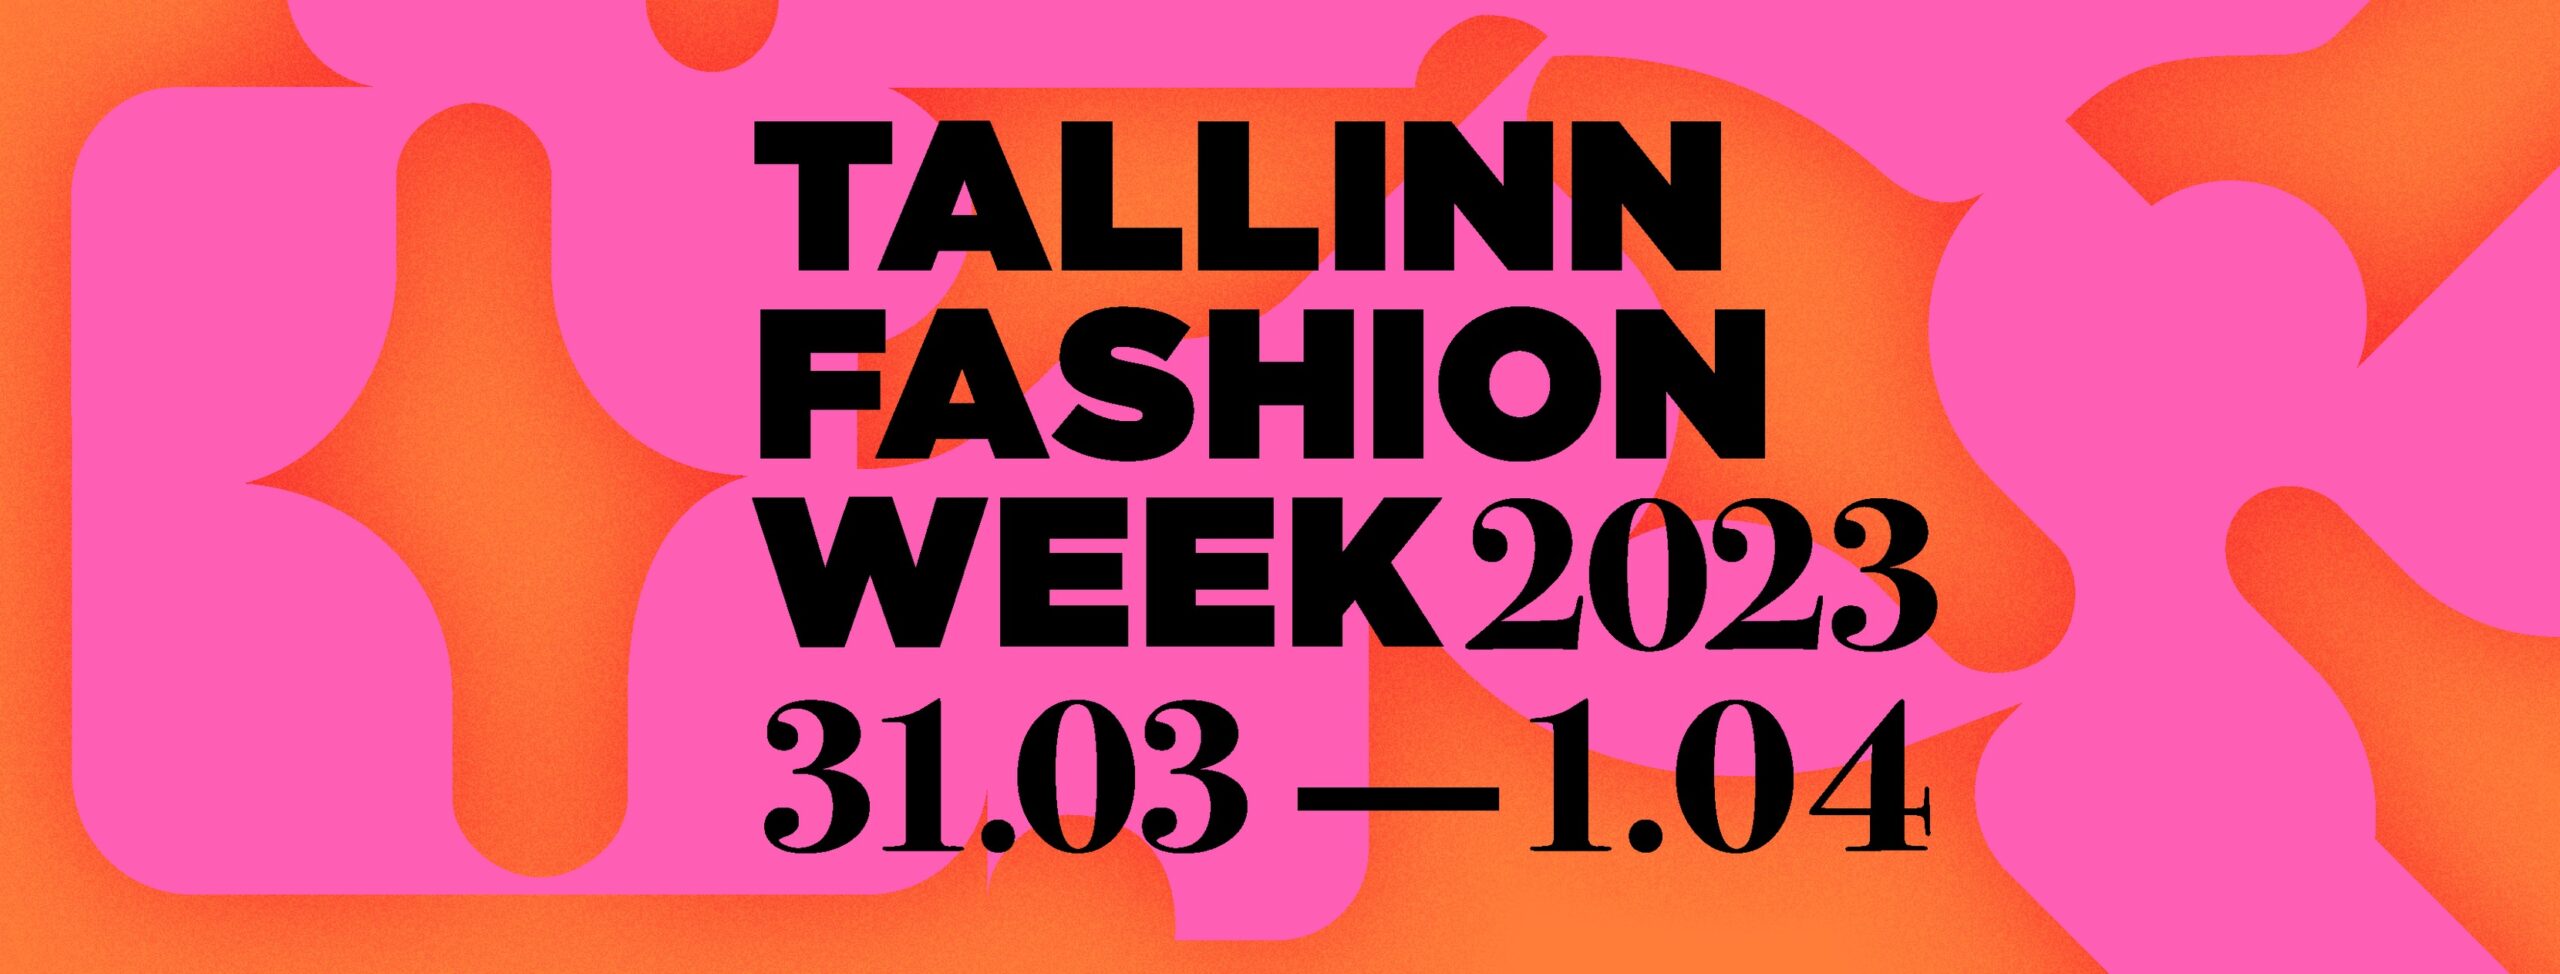 15485Tallinn Fashion Week 2023